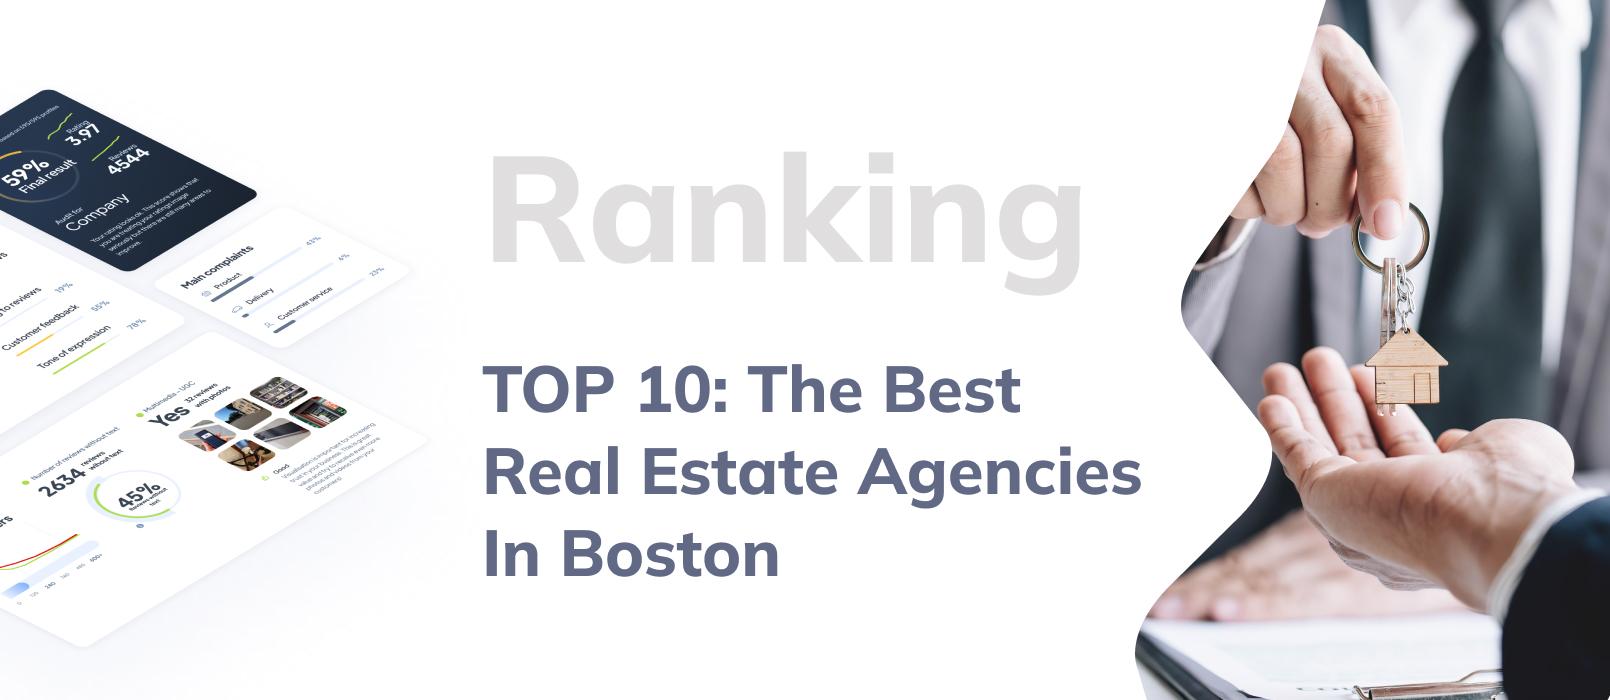 TOP 10 Best Real Estate Agencies - Ranking Based on Google Reviews